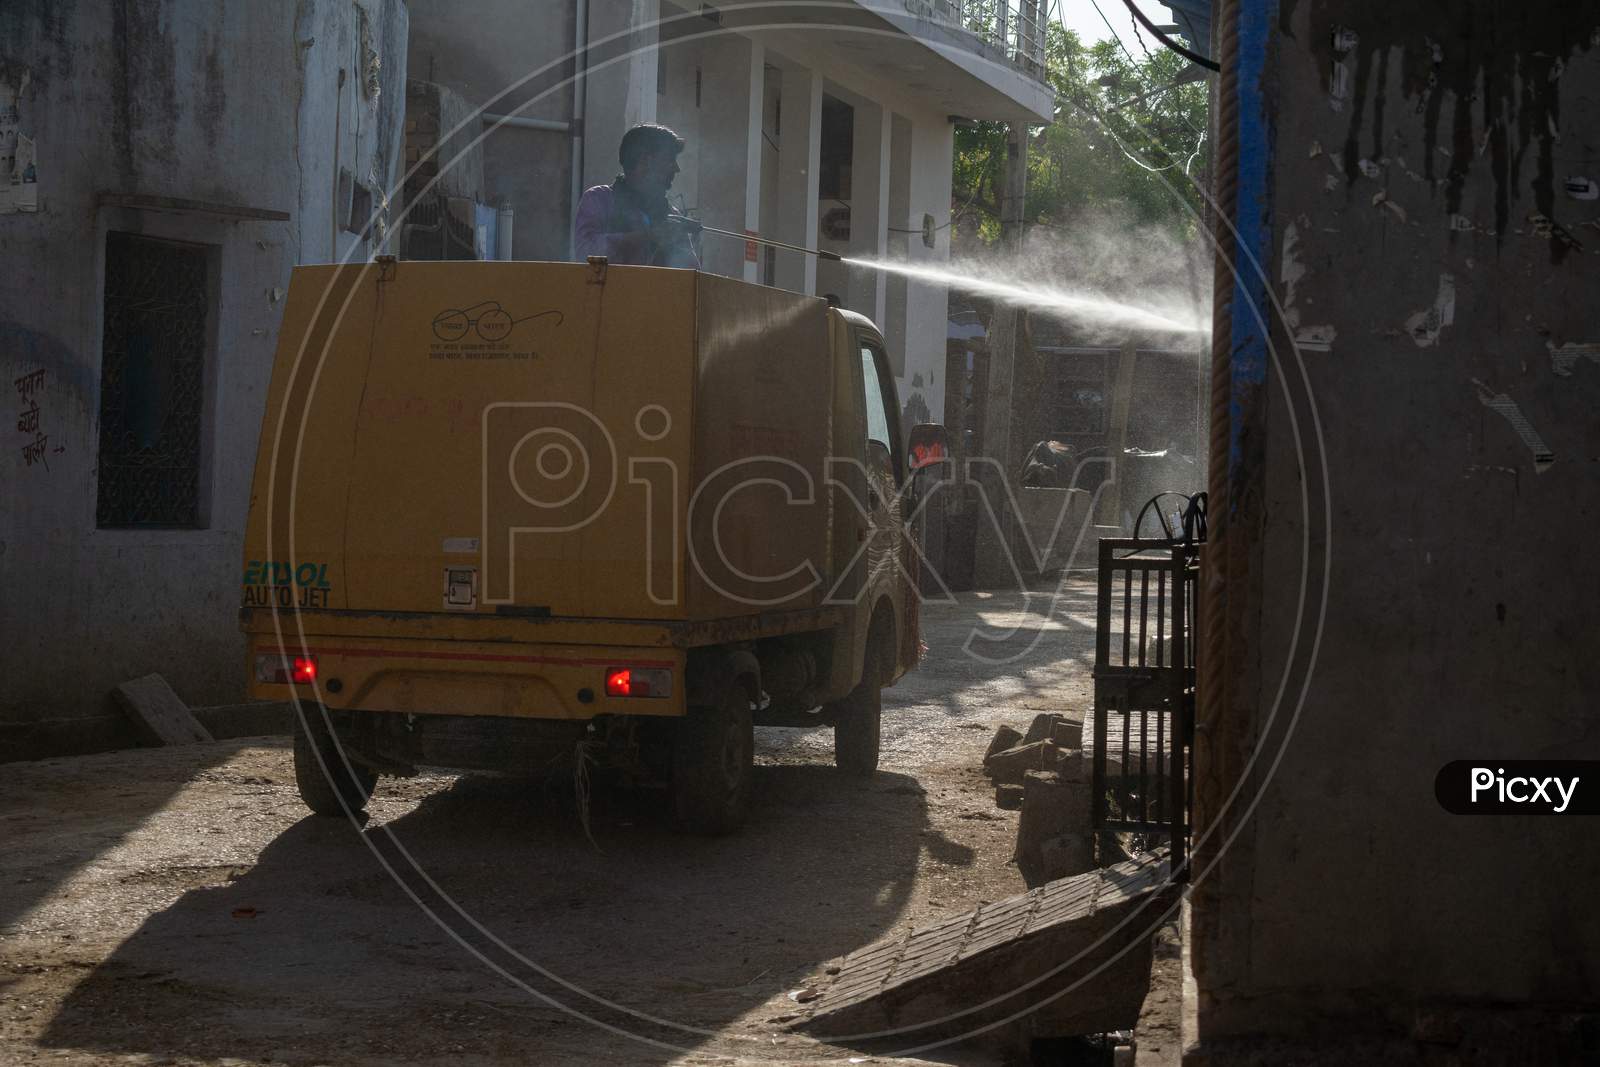 A man on Nagar palika municipality vehicle sprays Disinfectants amid concerns over coronavirus or covid 19